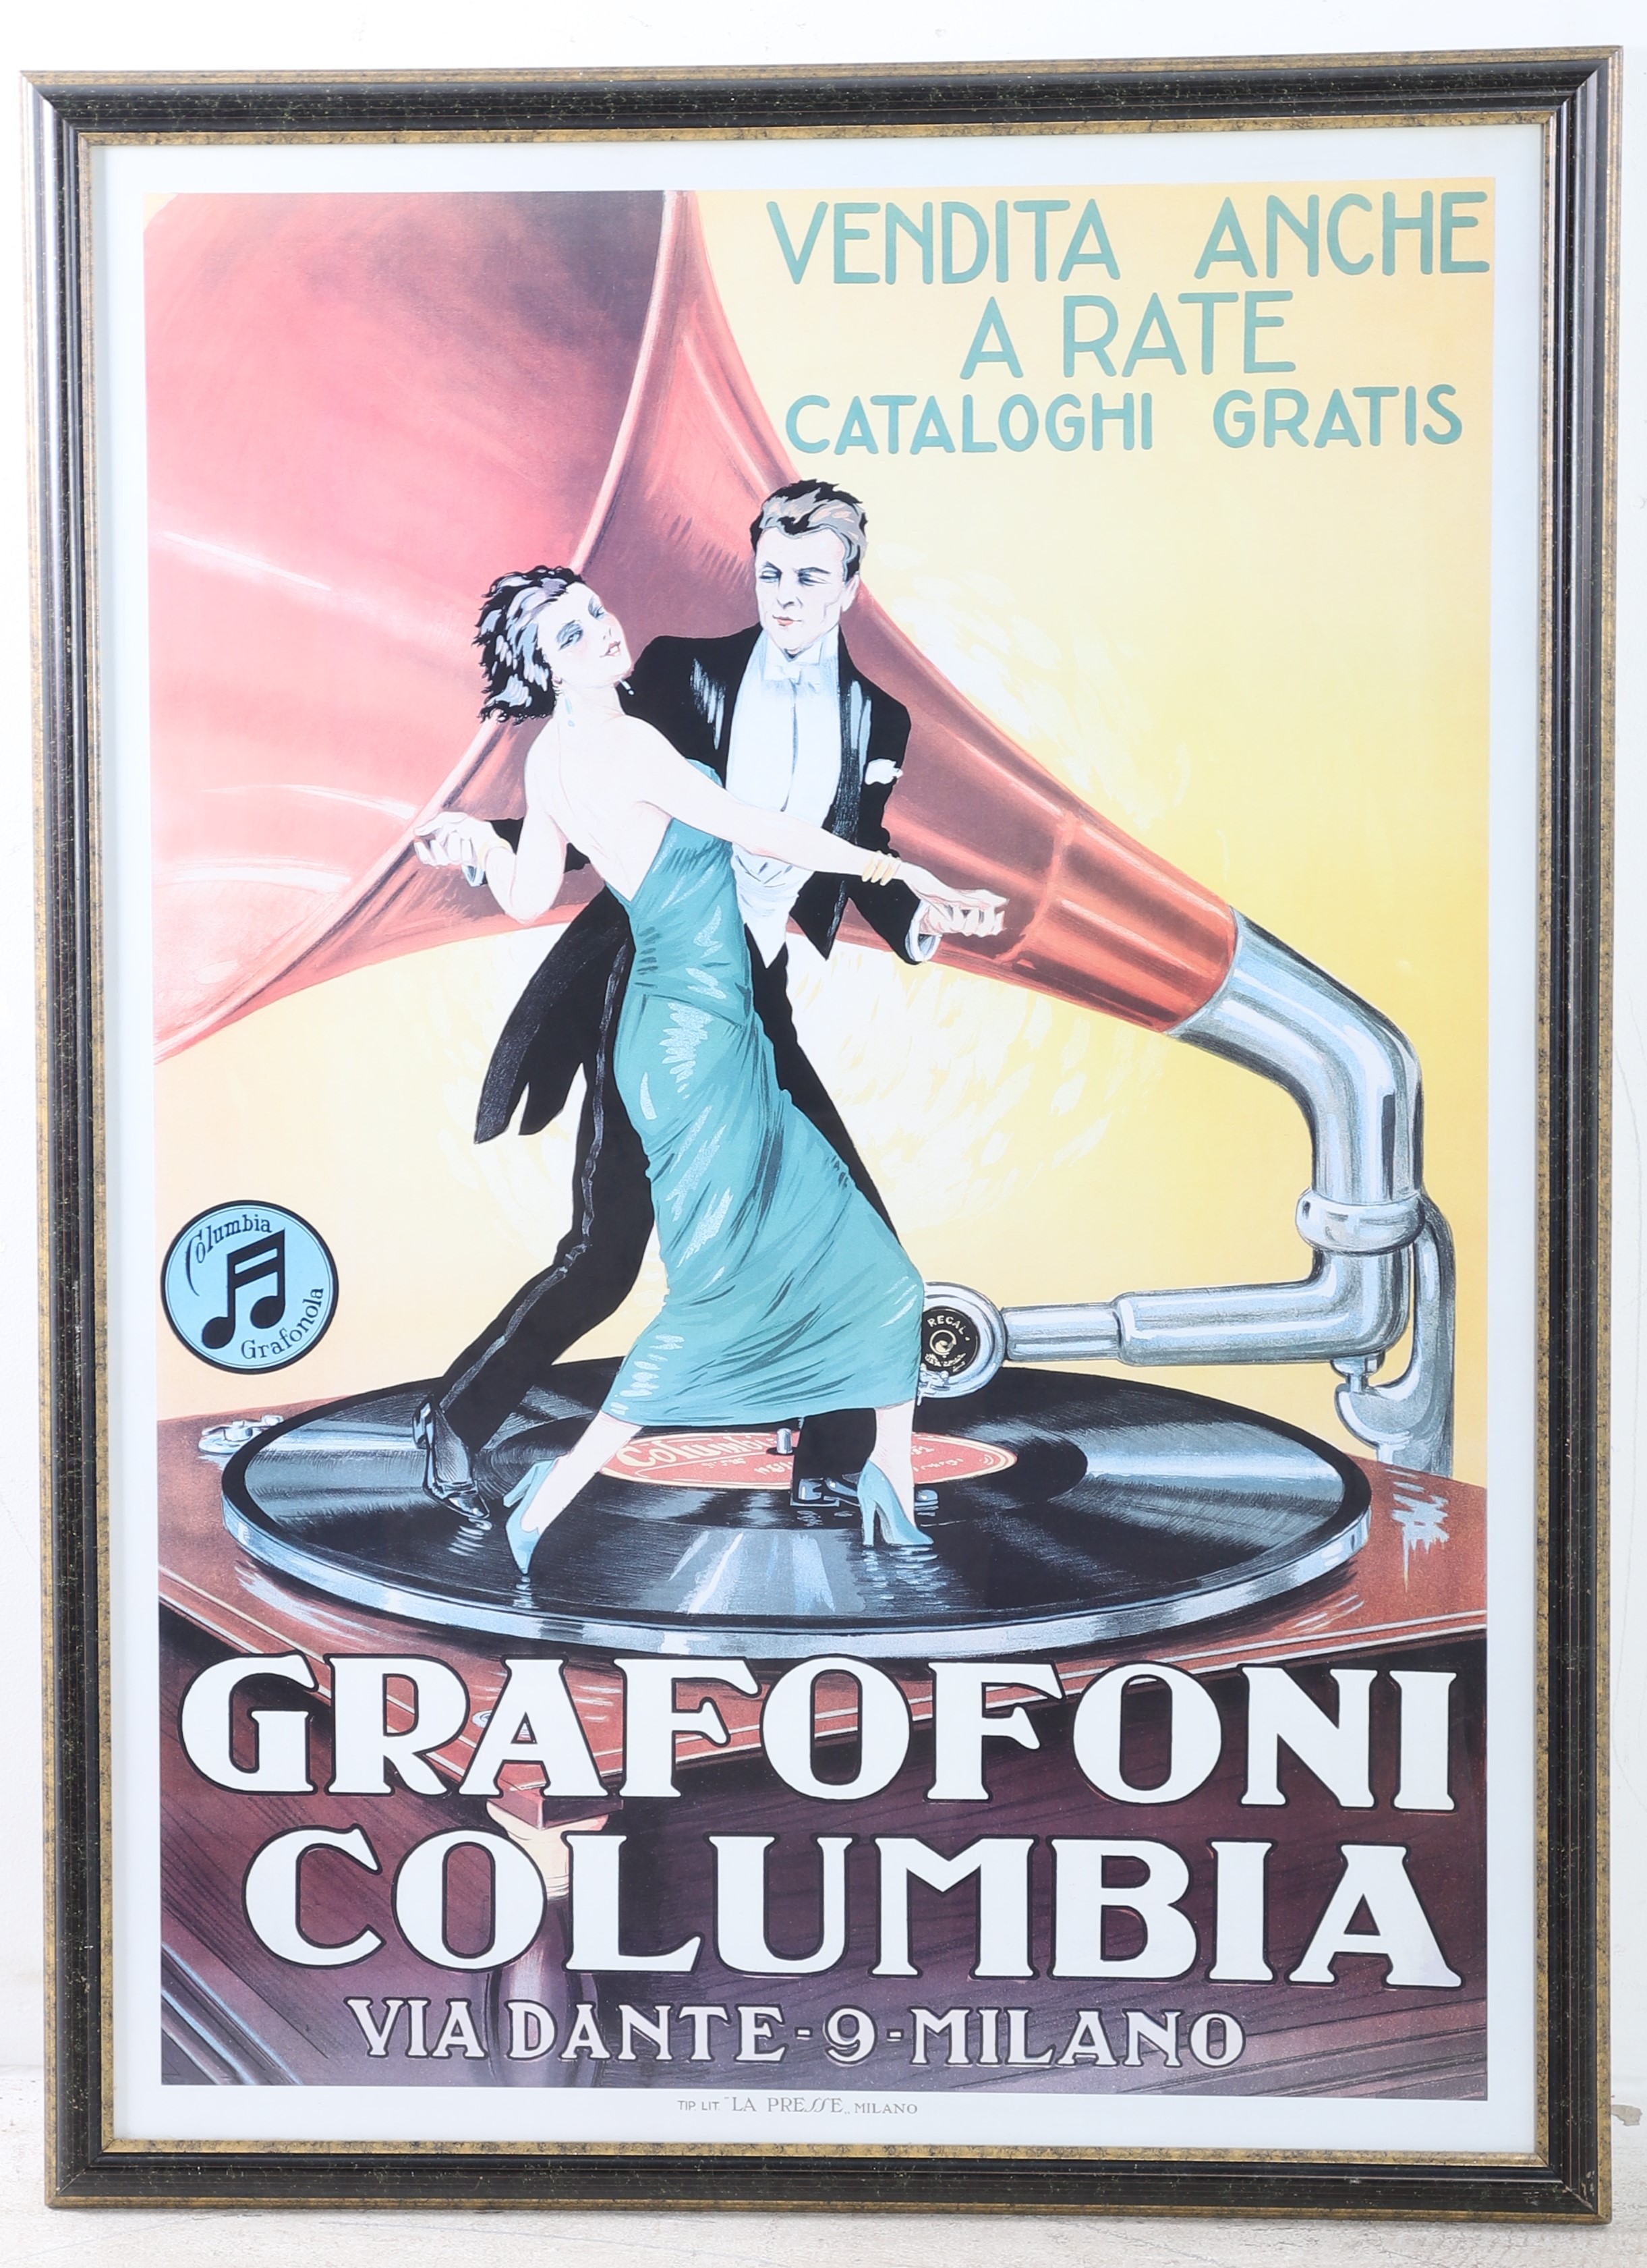 Grafofoni Columbia reproduction